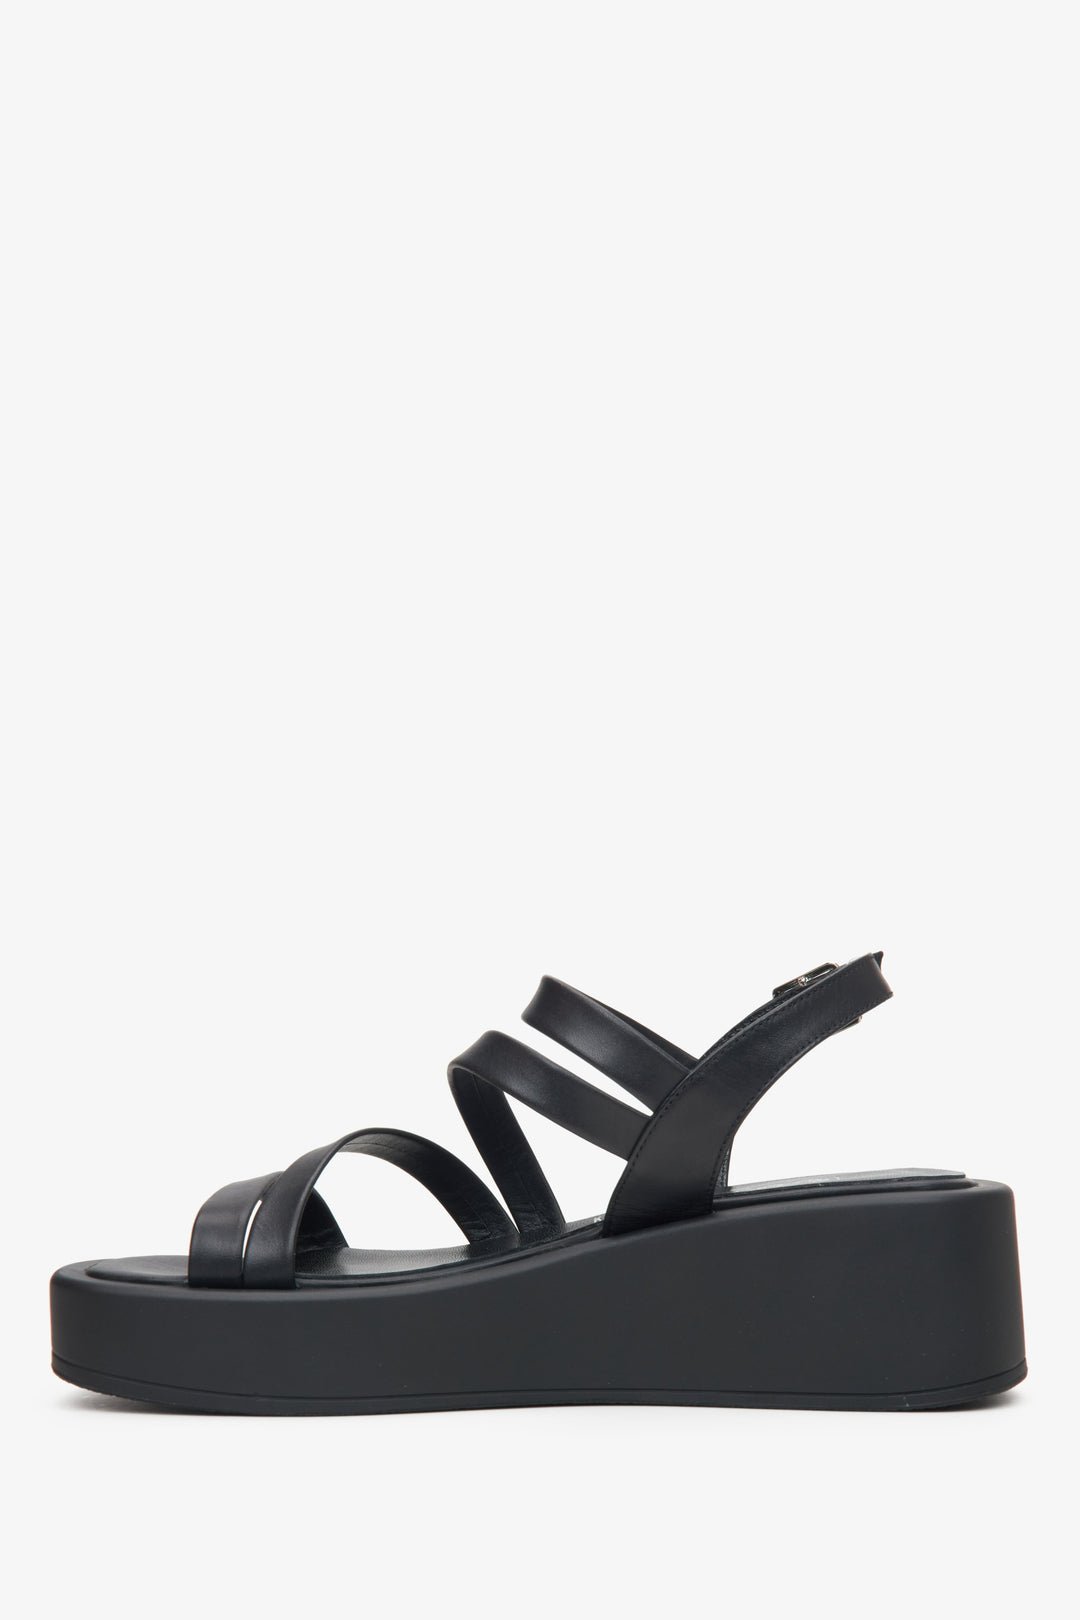 Women's leather black wedge sandals by Estro - shoe profile.